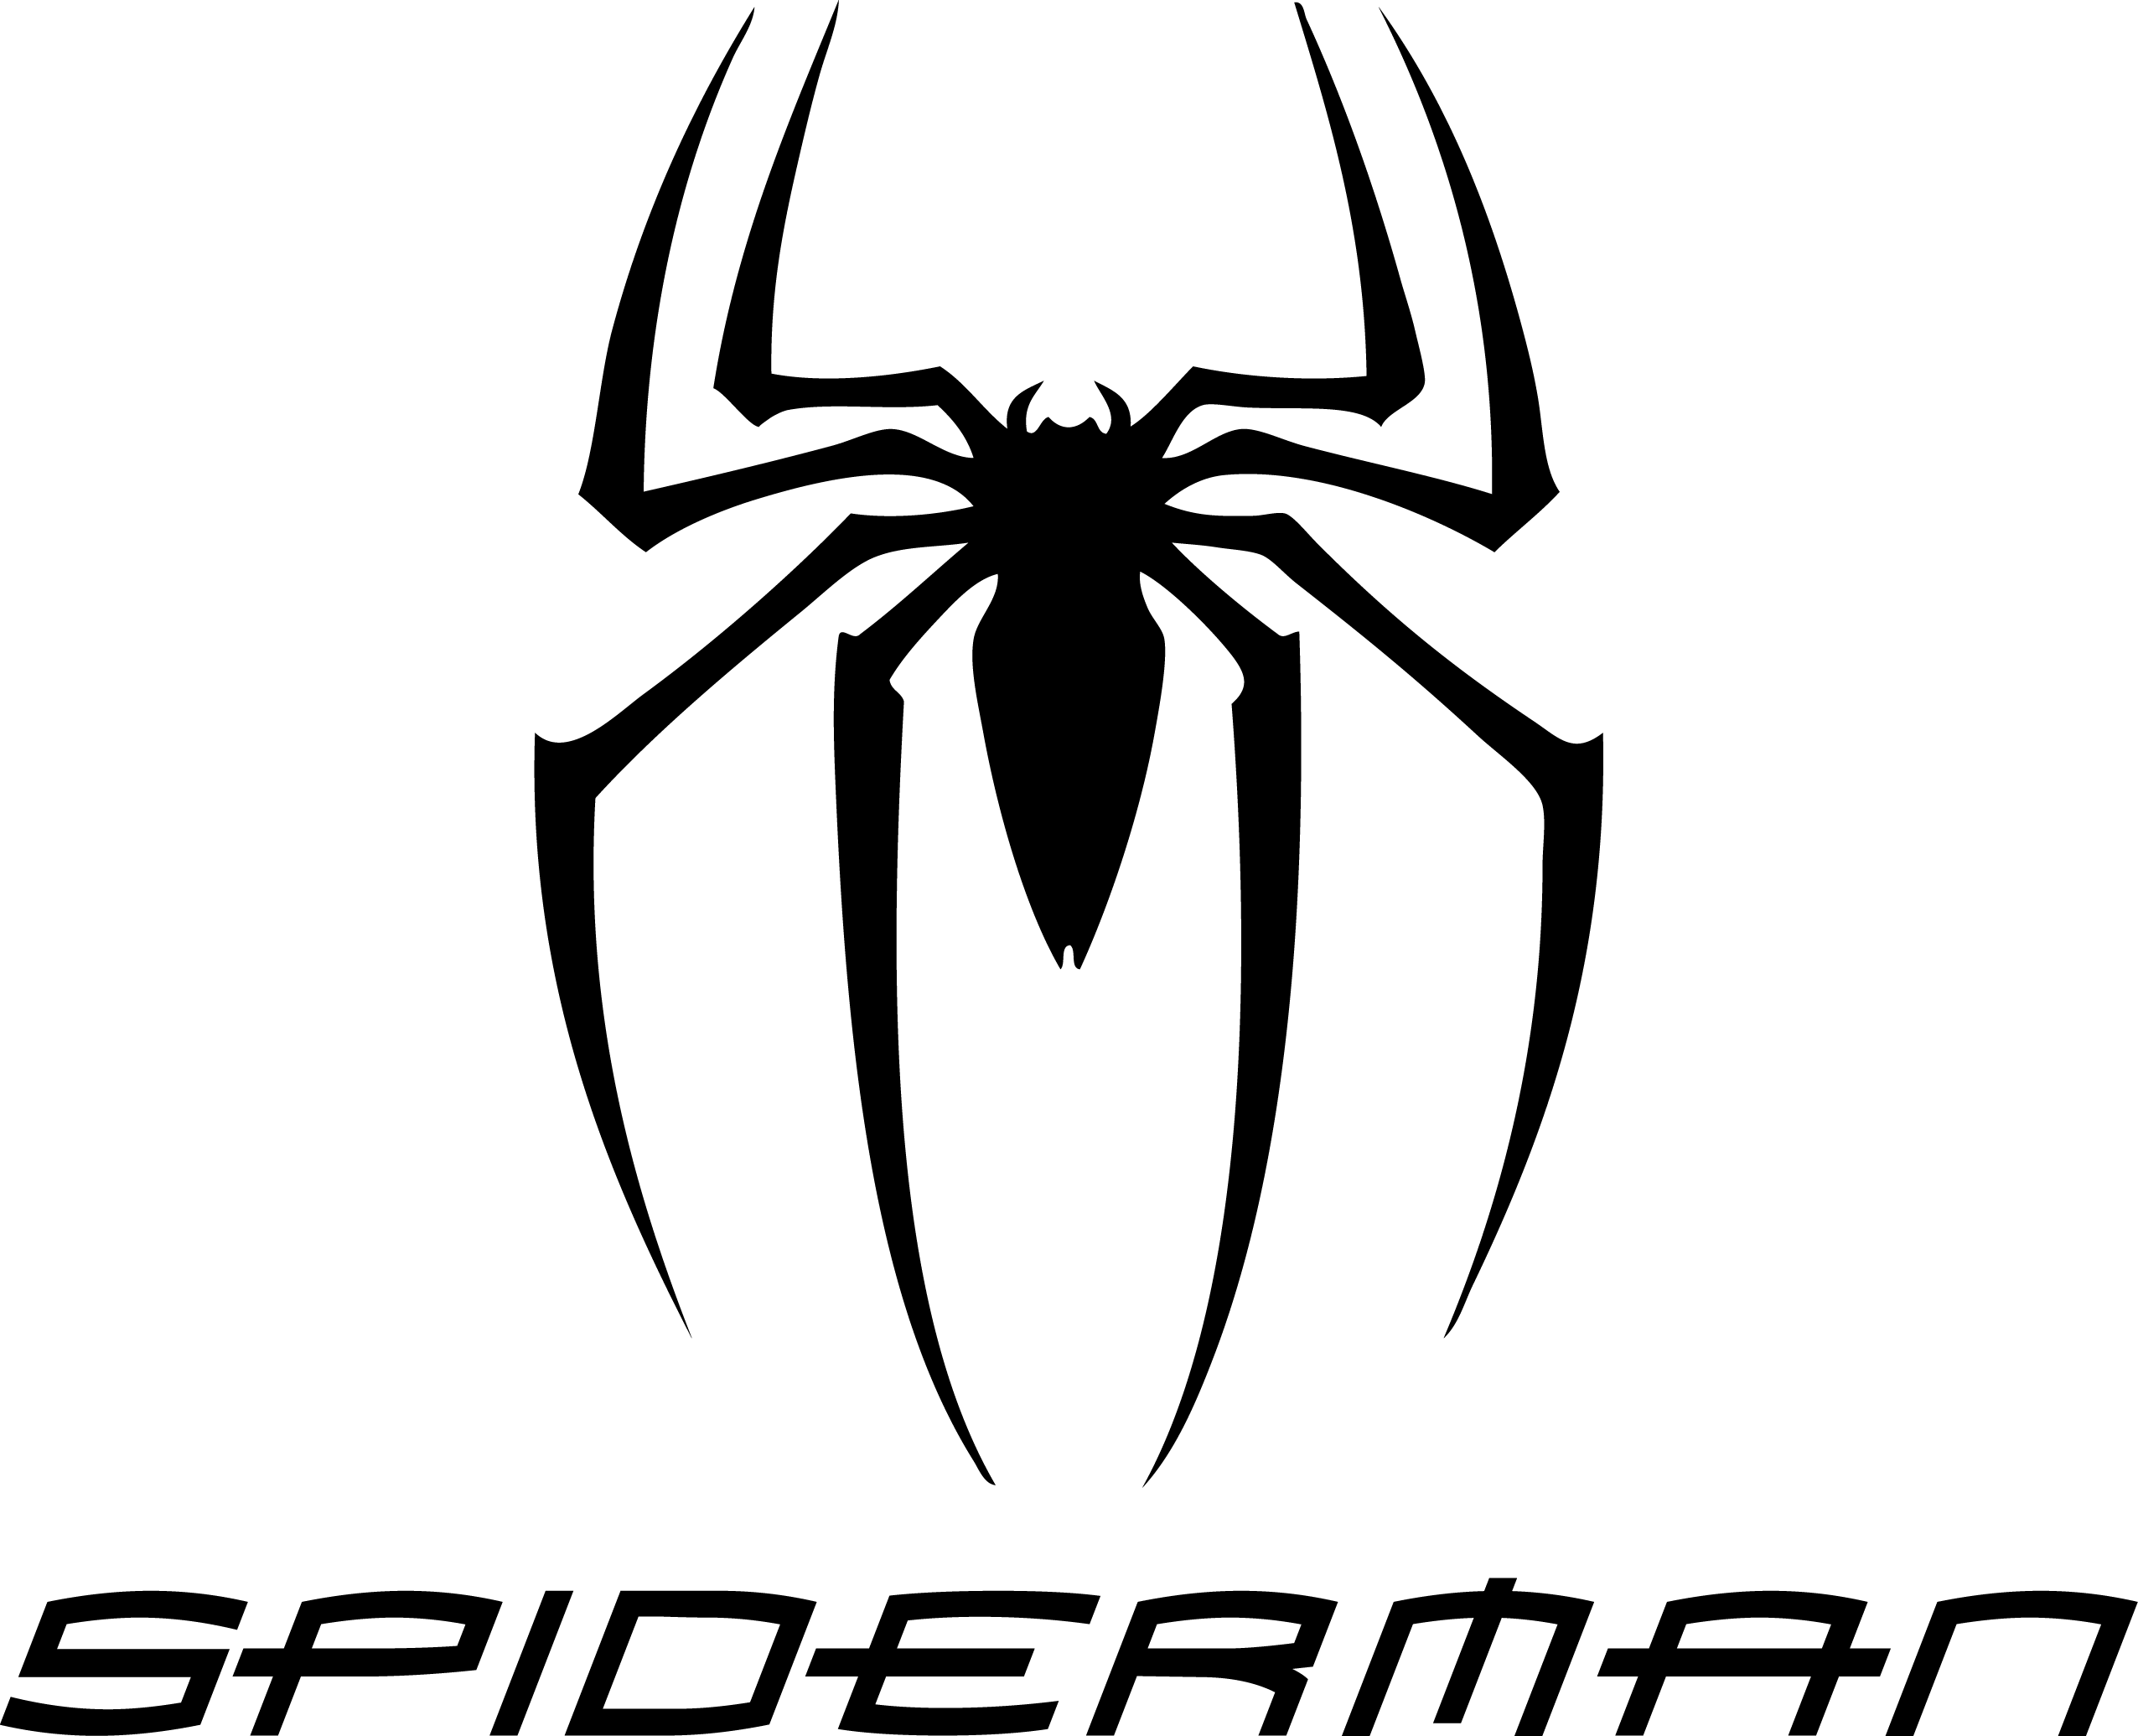 Spiderman Logo - Spiderman Logo PNG Transparent Spiderman Logo.PNG Images. | PlusPNG